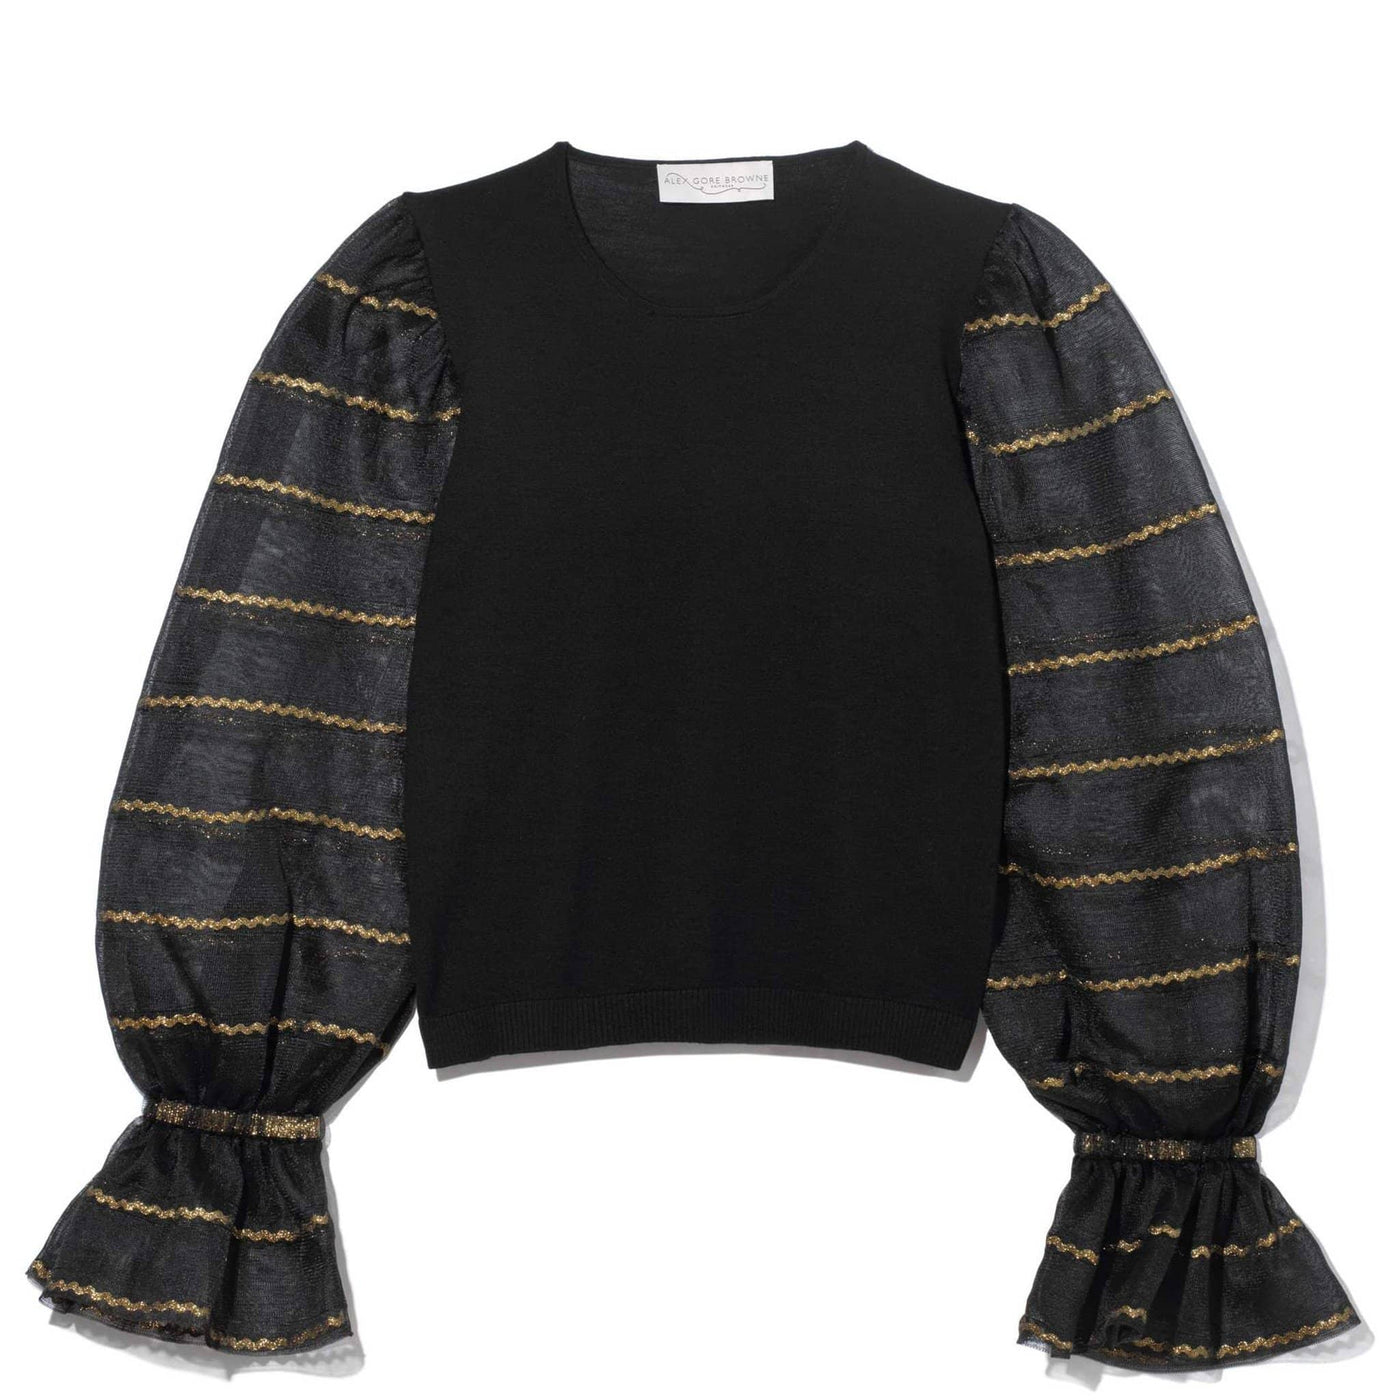 Black Carousel Sweater - Ric Rac Ribbon stripe